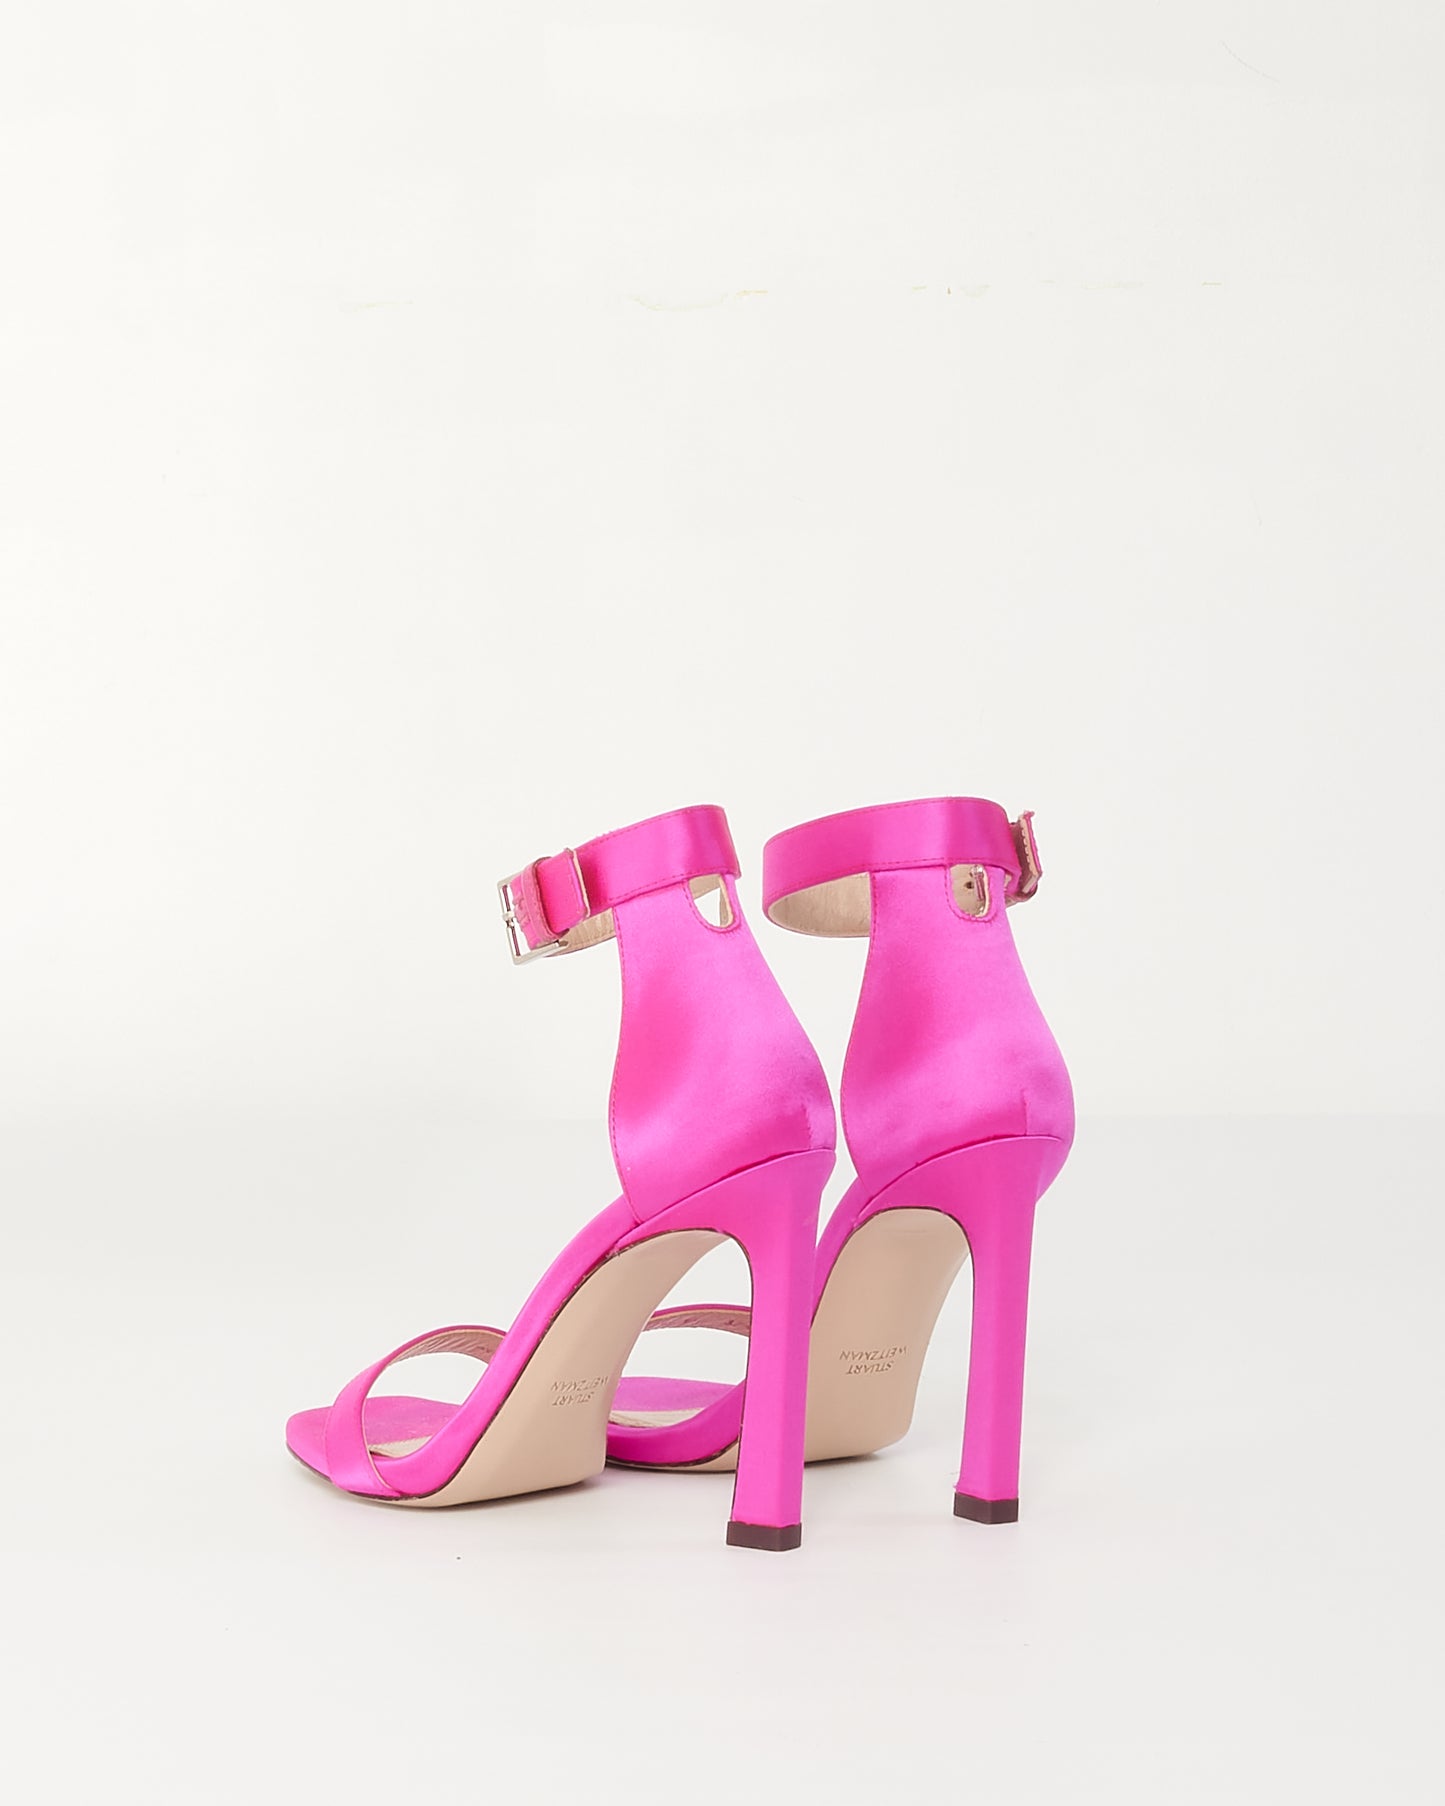 Stuart Weitzman Fuchsia Pink Satin Heel Sandals - 36